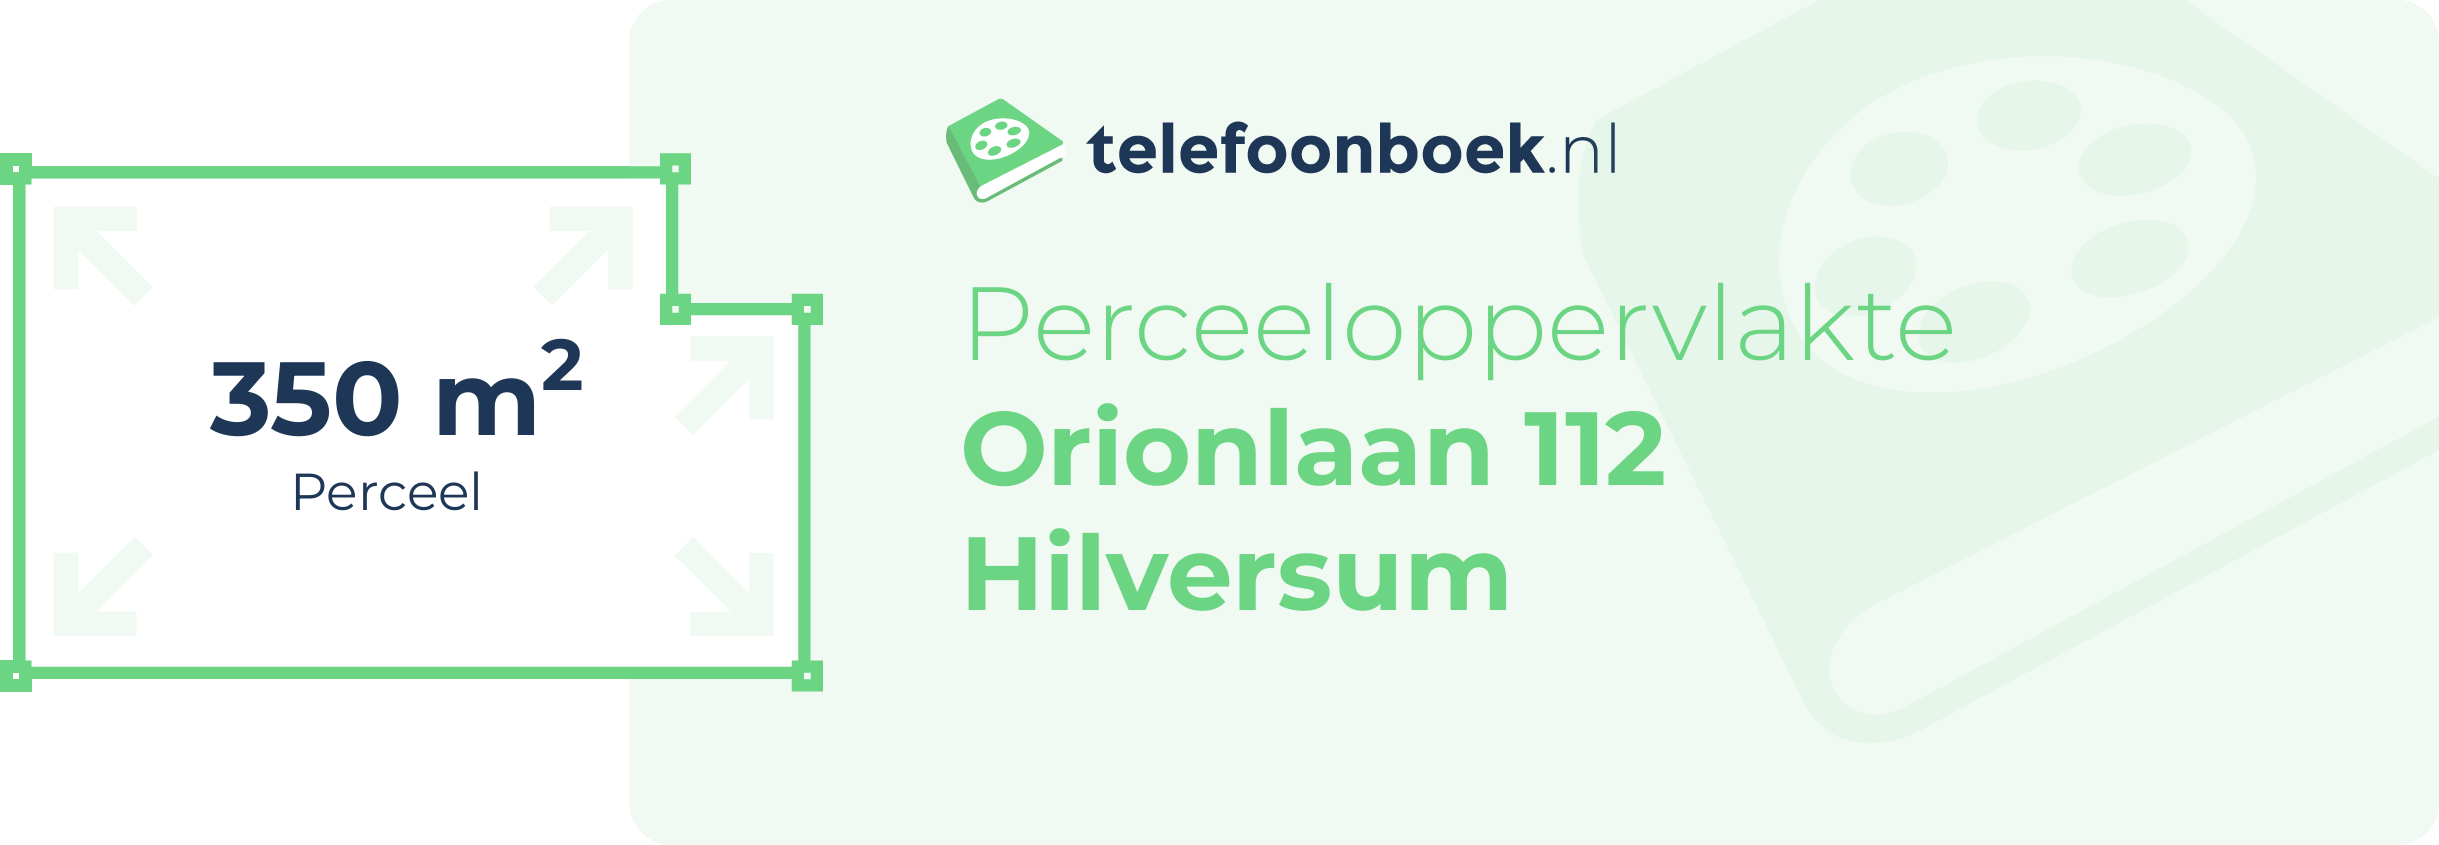 Perceeloppervlakte Orionlaan 112 Hilversum